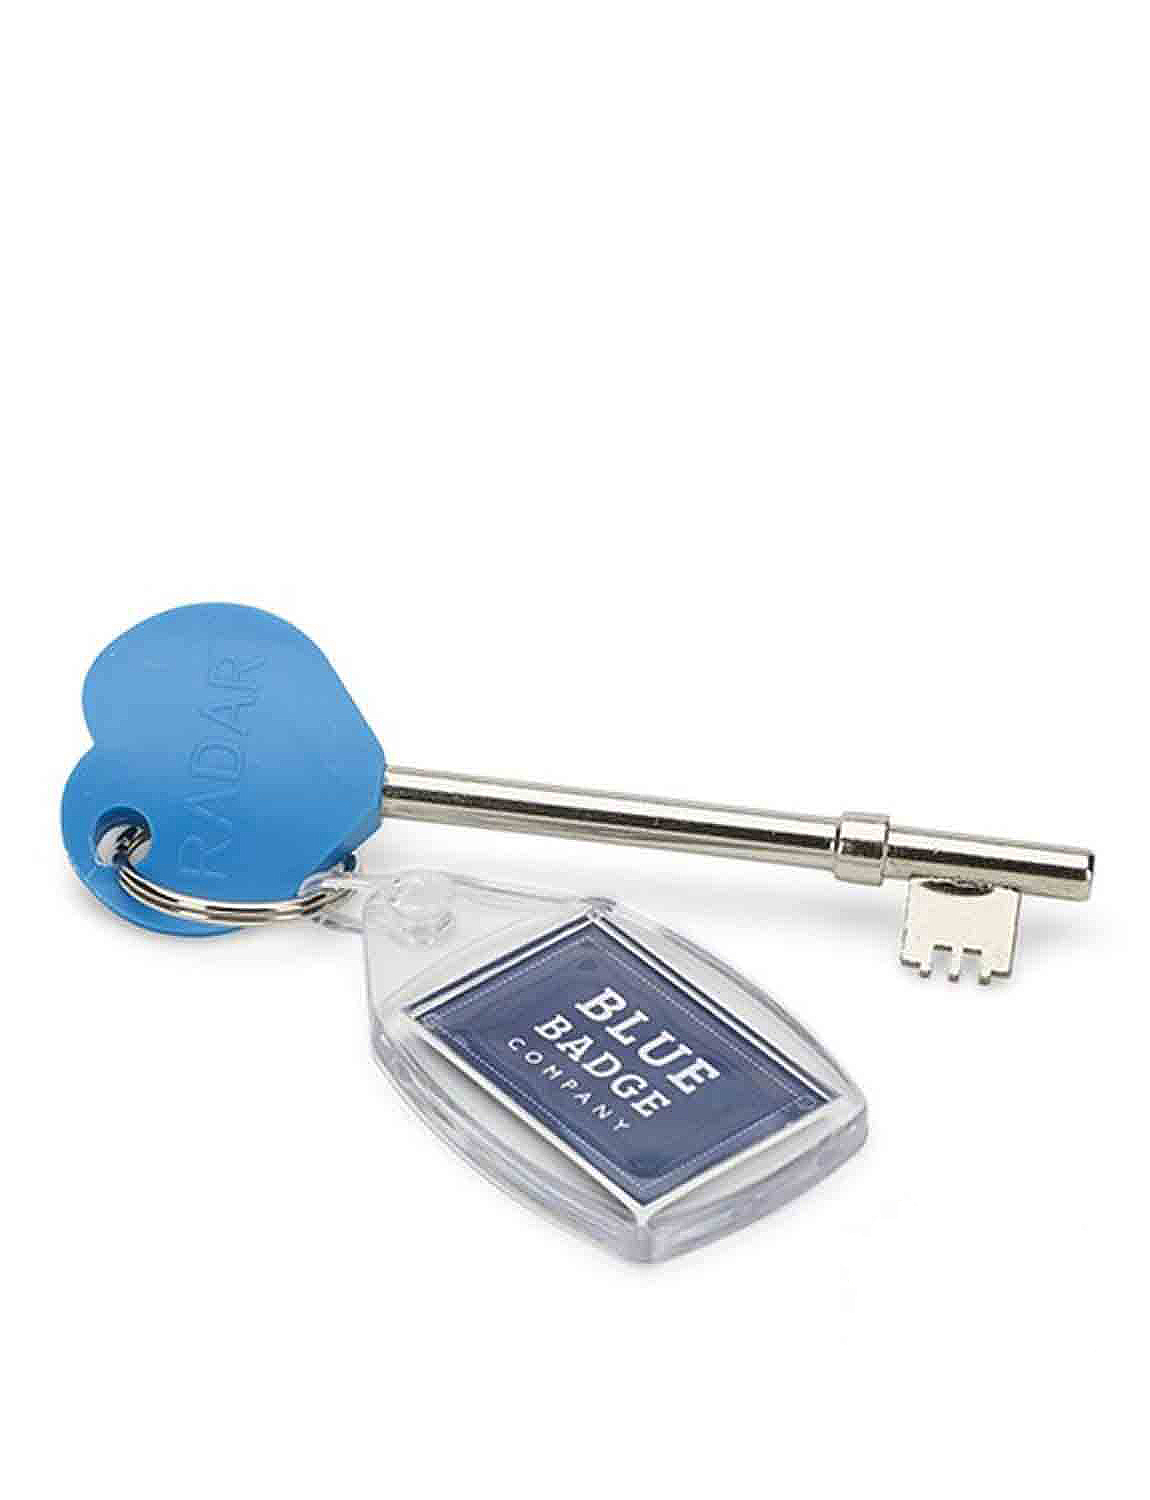 Blue key. Голубые ключи (Blue Keys). Компания радар ключи. Ключ Блю вилл. Синий ключ 1с.